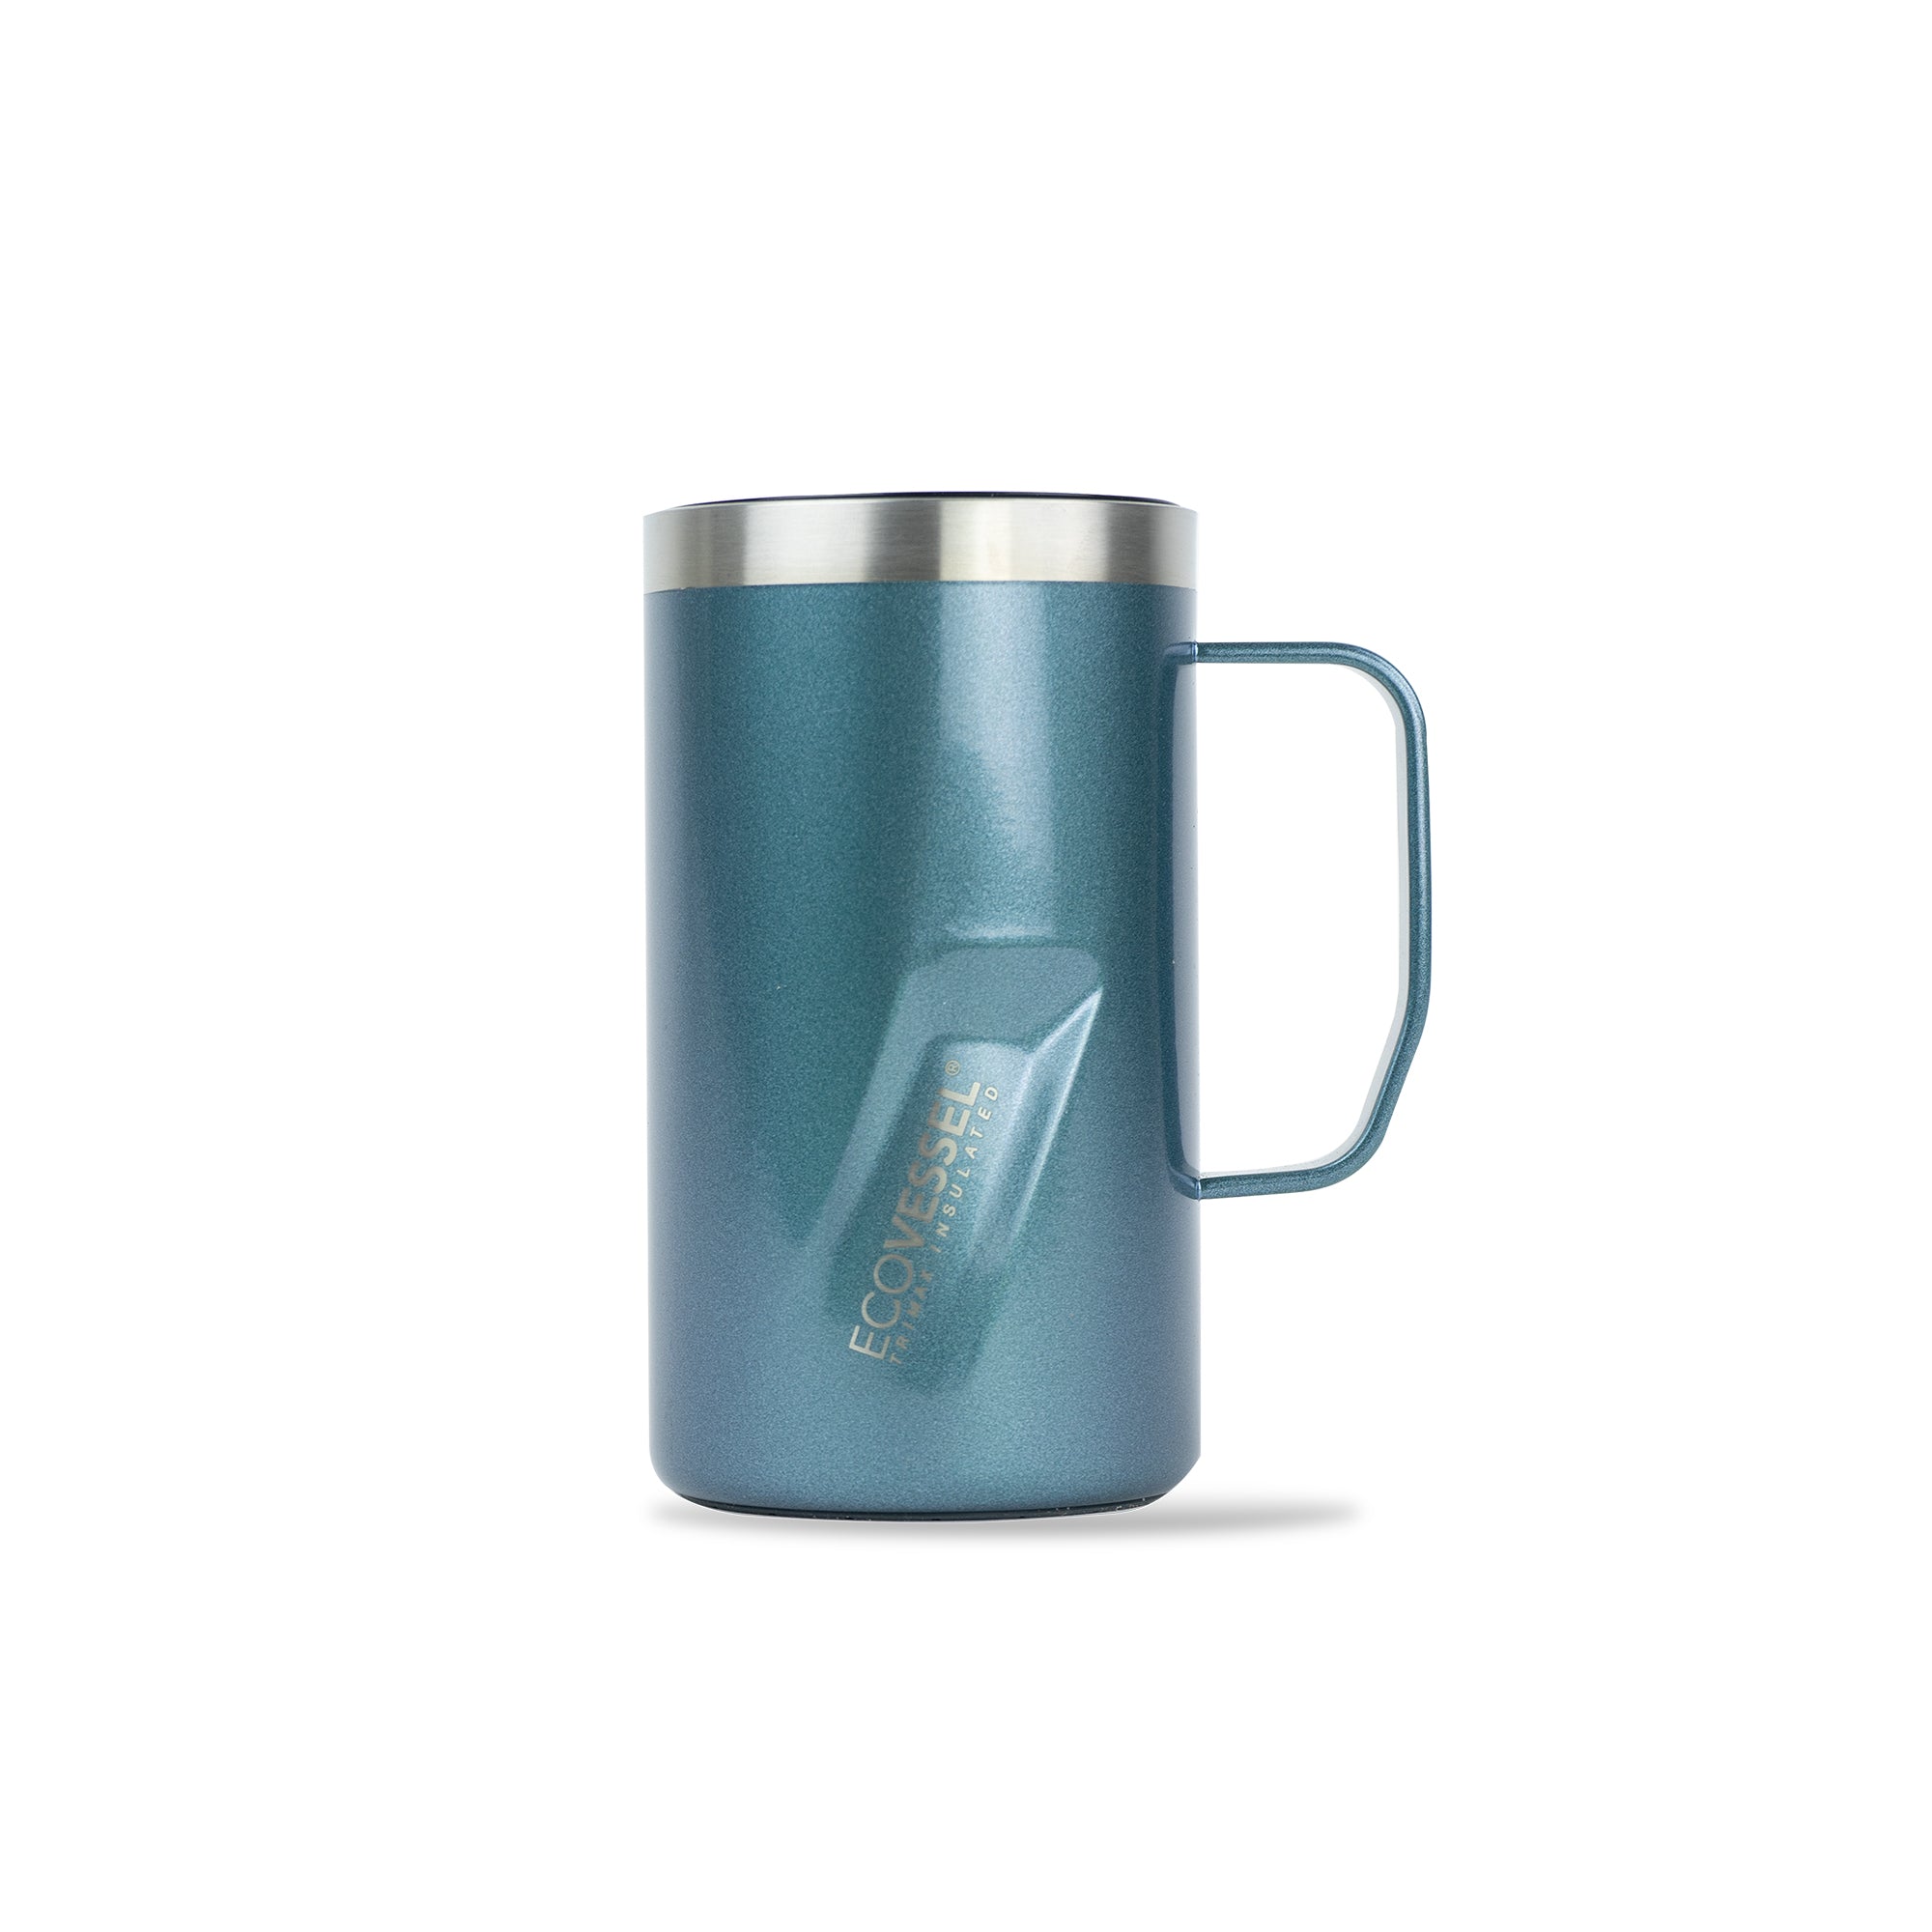 THE TRANSIT - Insulated Coffee Mug / Beer Mug - 16 oz - Past Season Colors